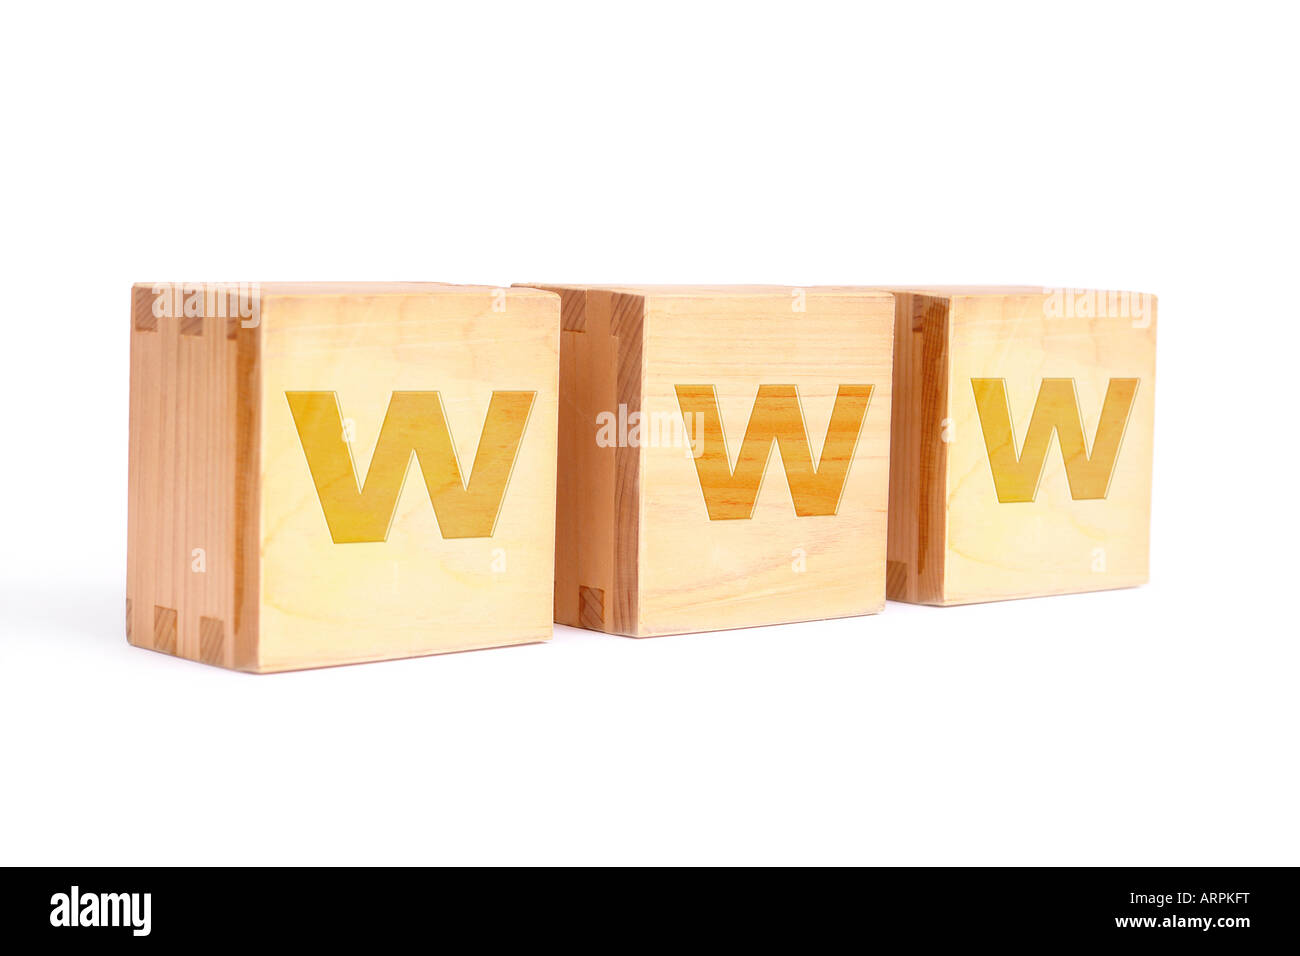 Three wooden letter blocks spelling WWW over white background Stock Photo